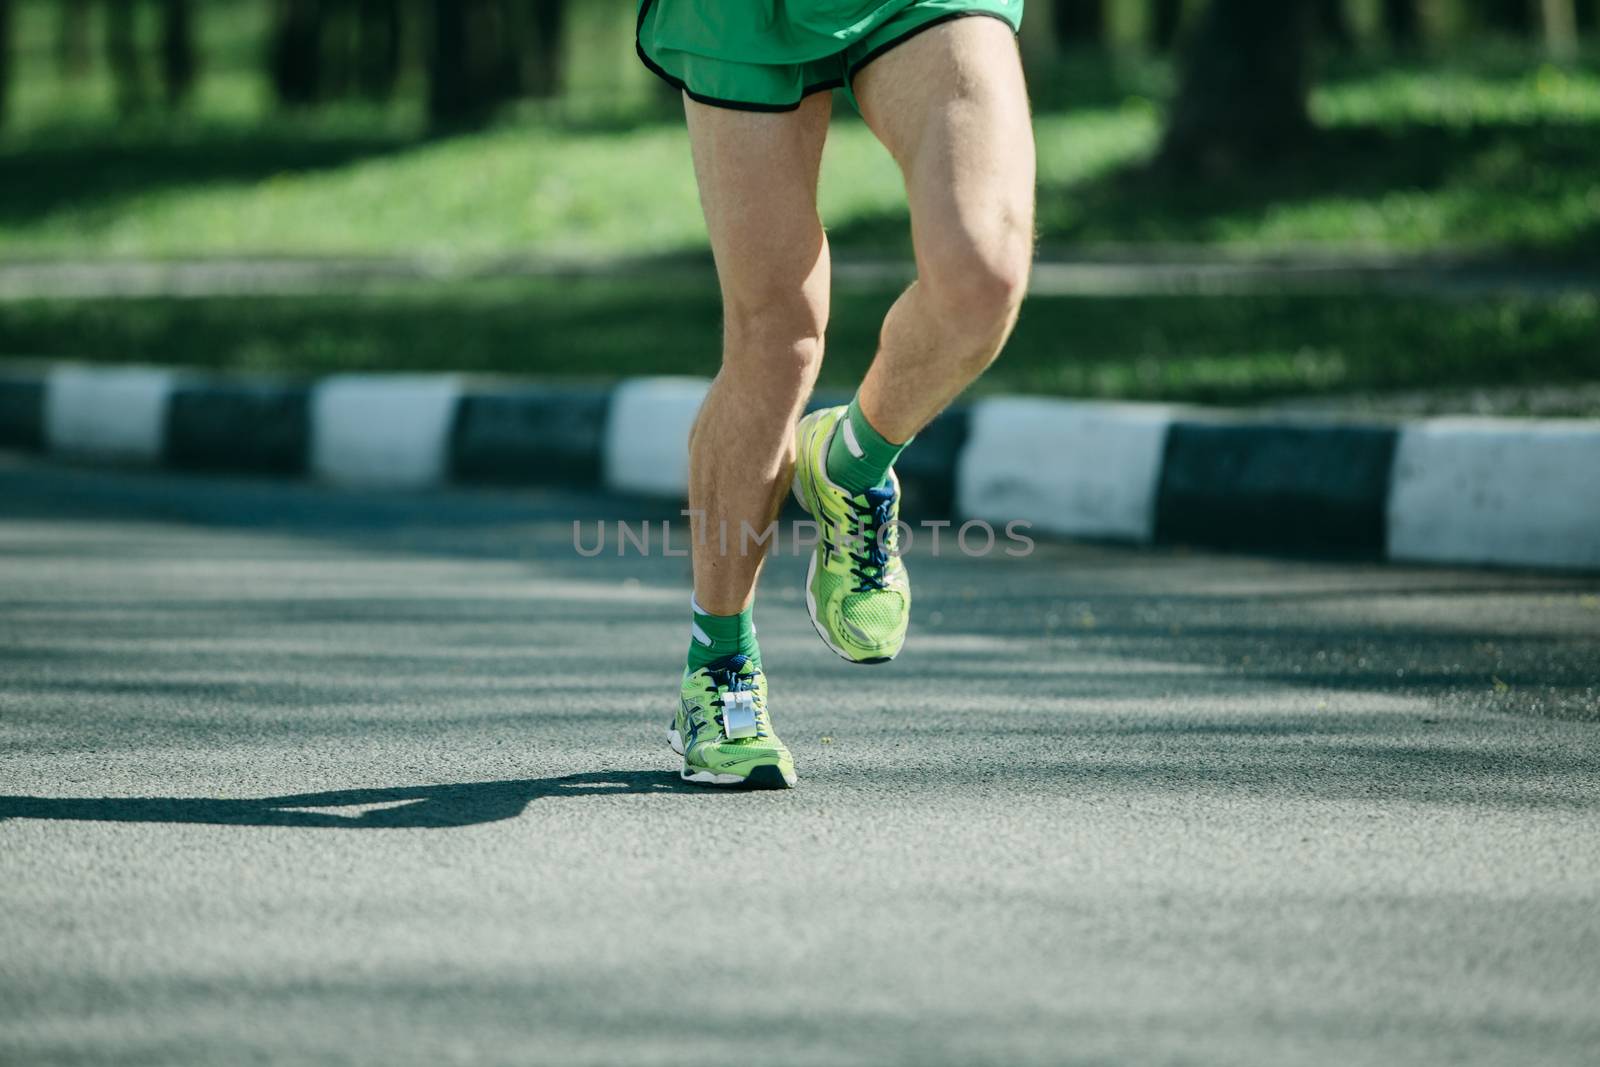 Marathon runner legs and green running sneakers of man jogging outdoors on asphalt road